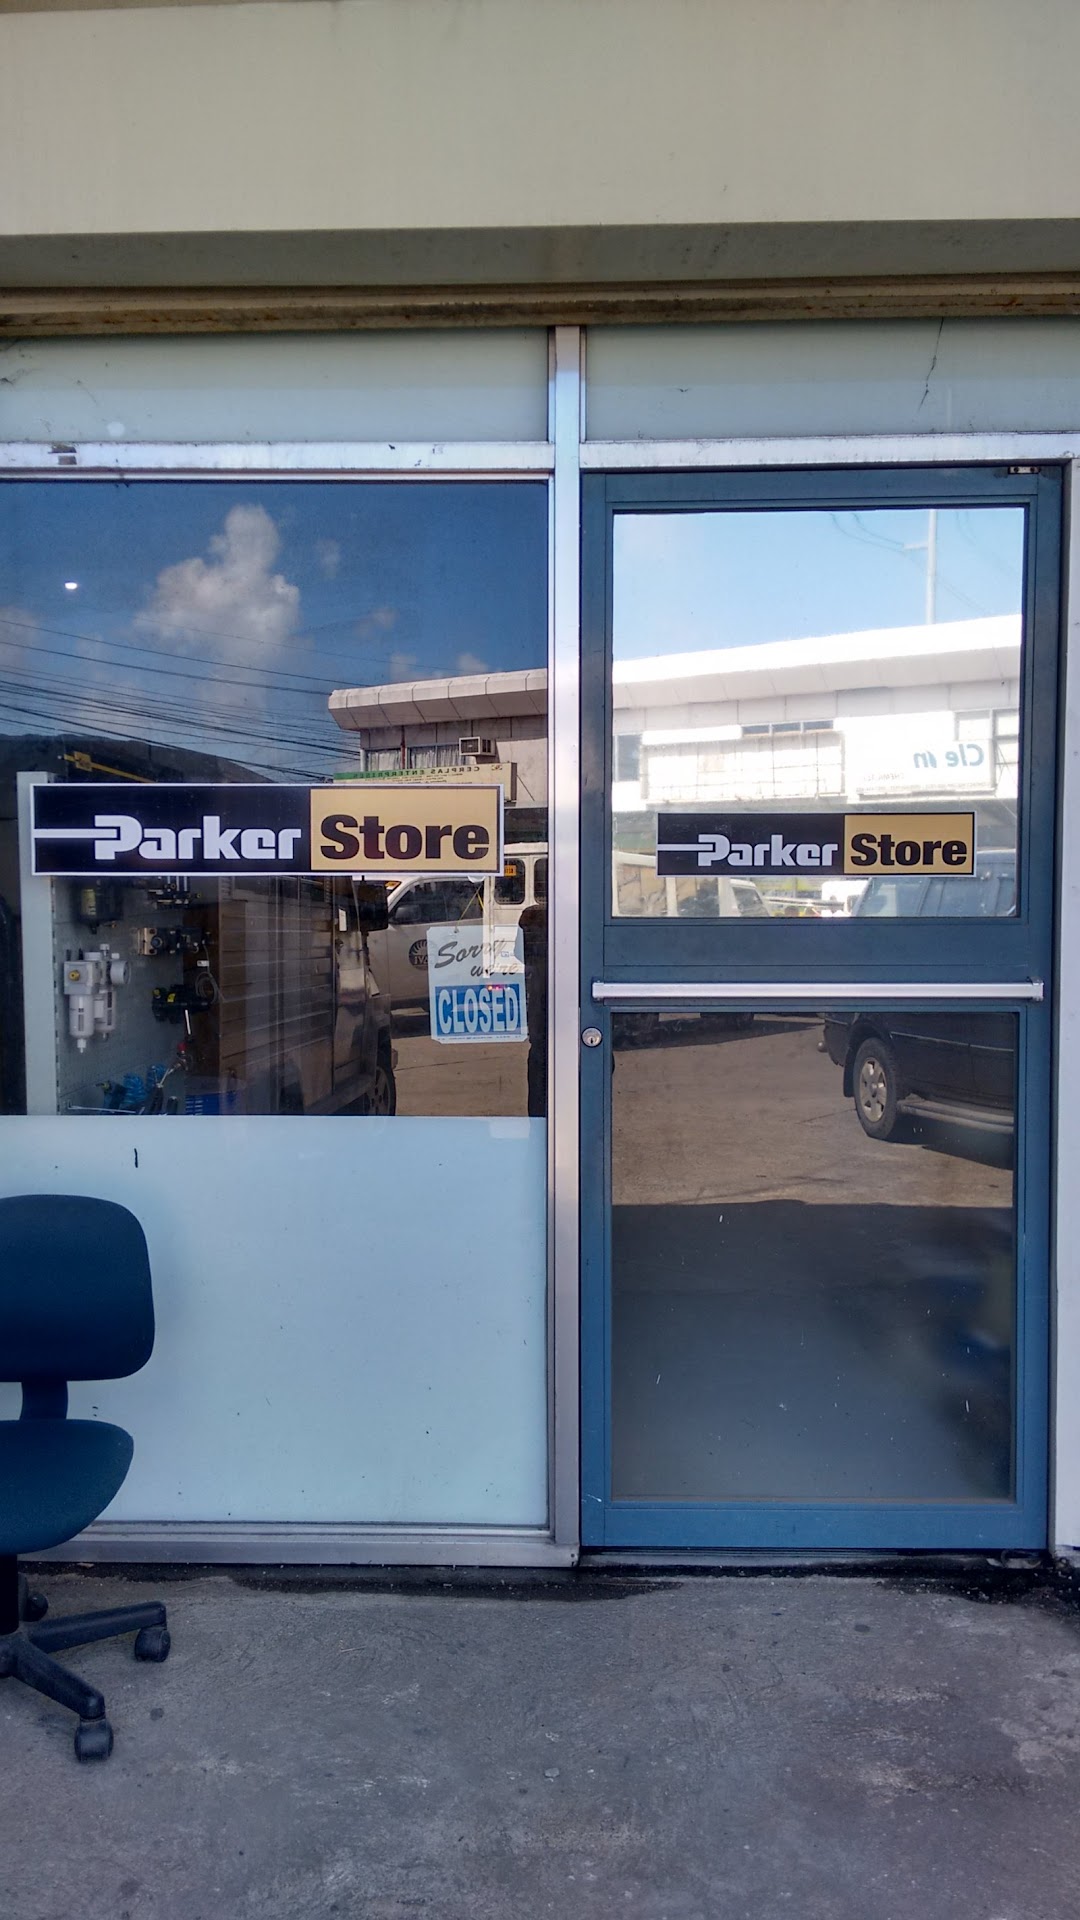 Parker Store